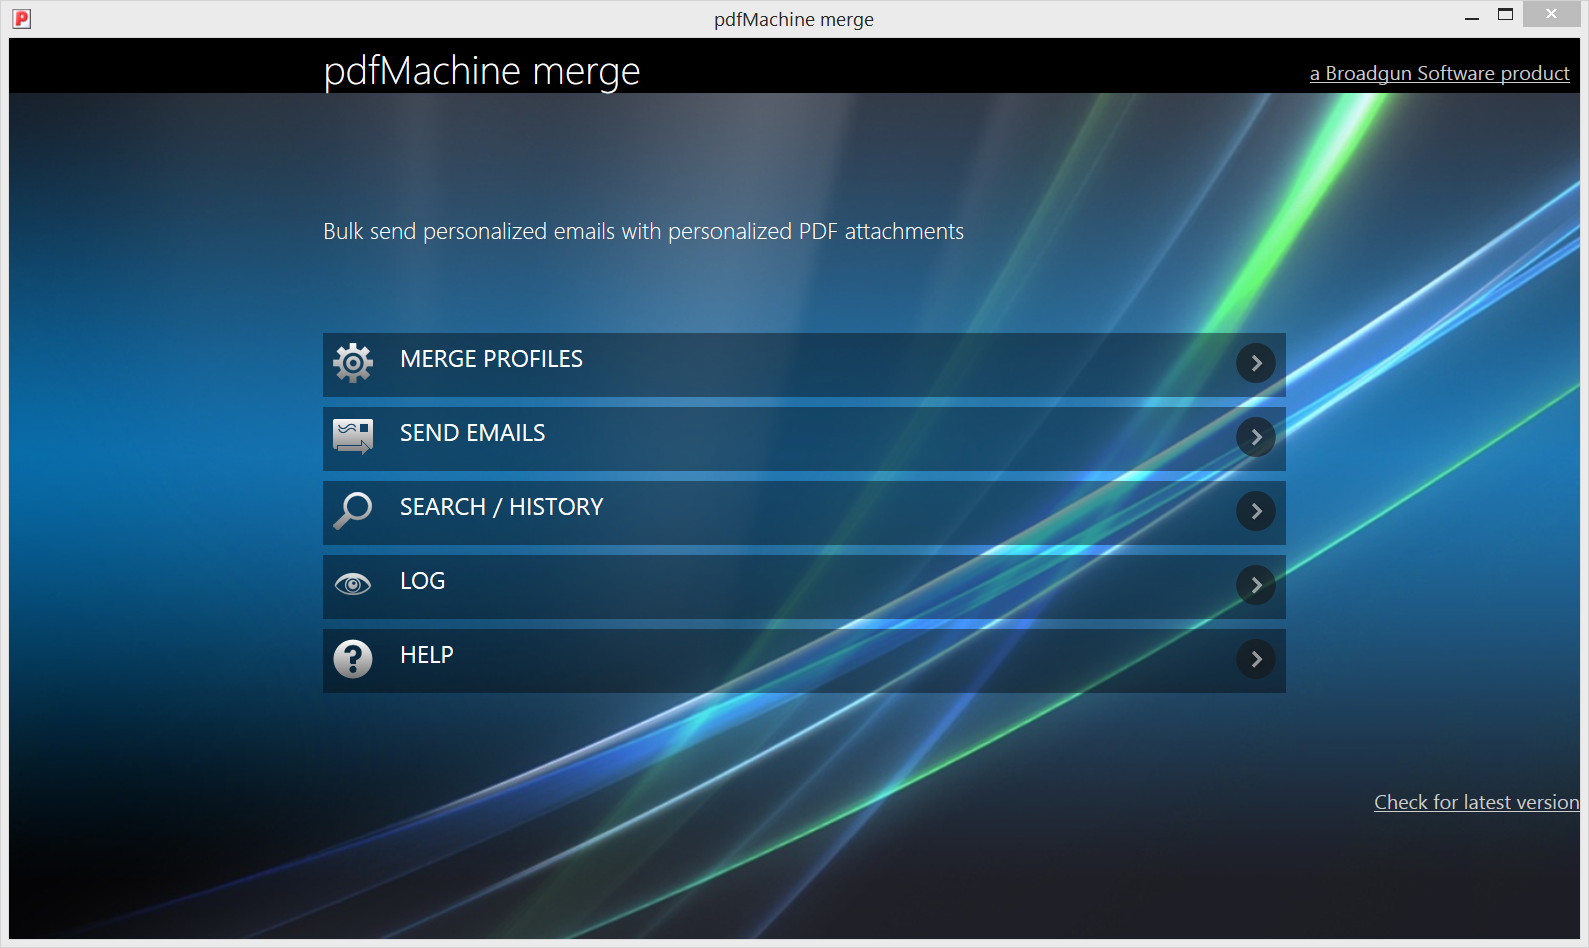 pdfMachine merge 1.0.6330.28466 software screenshot